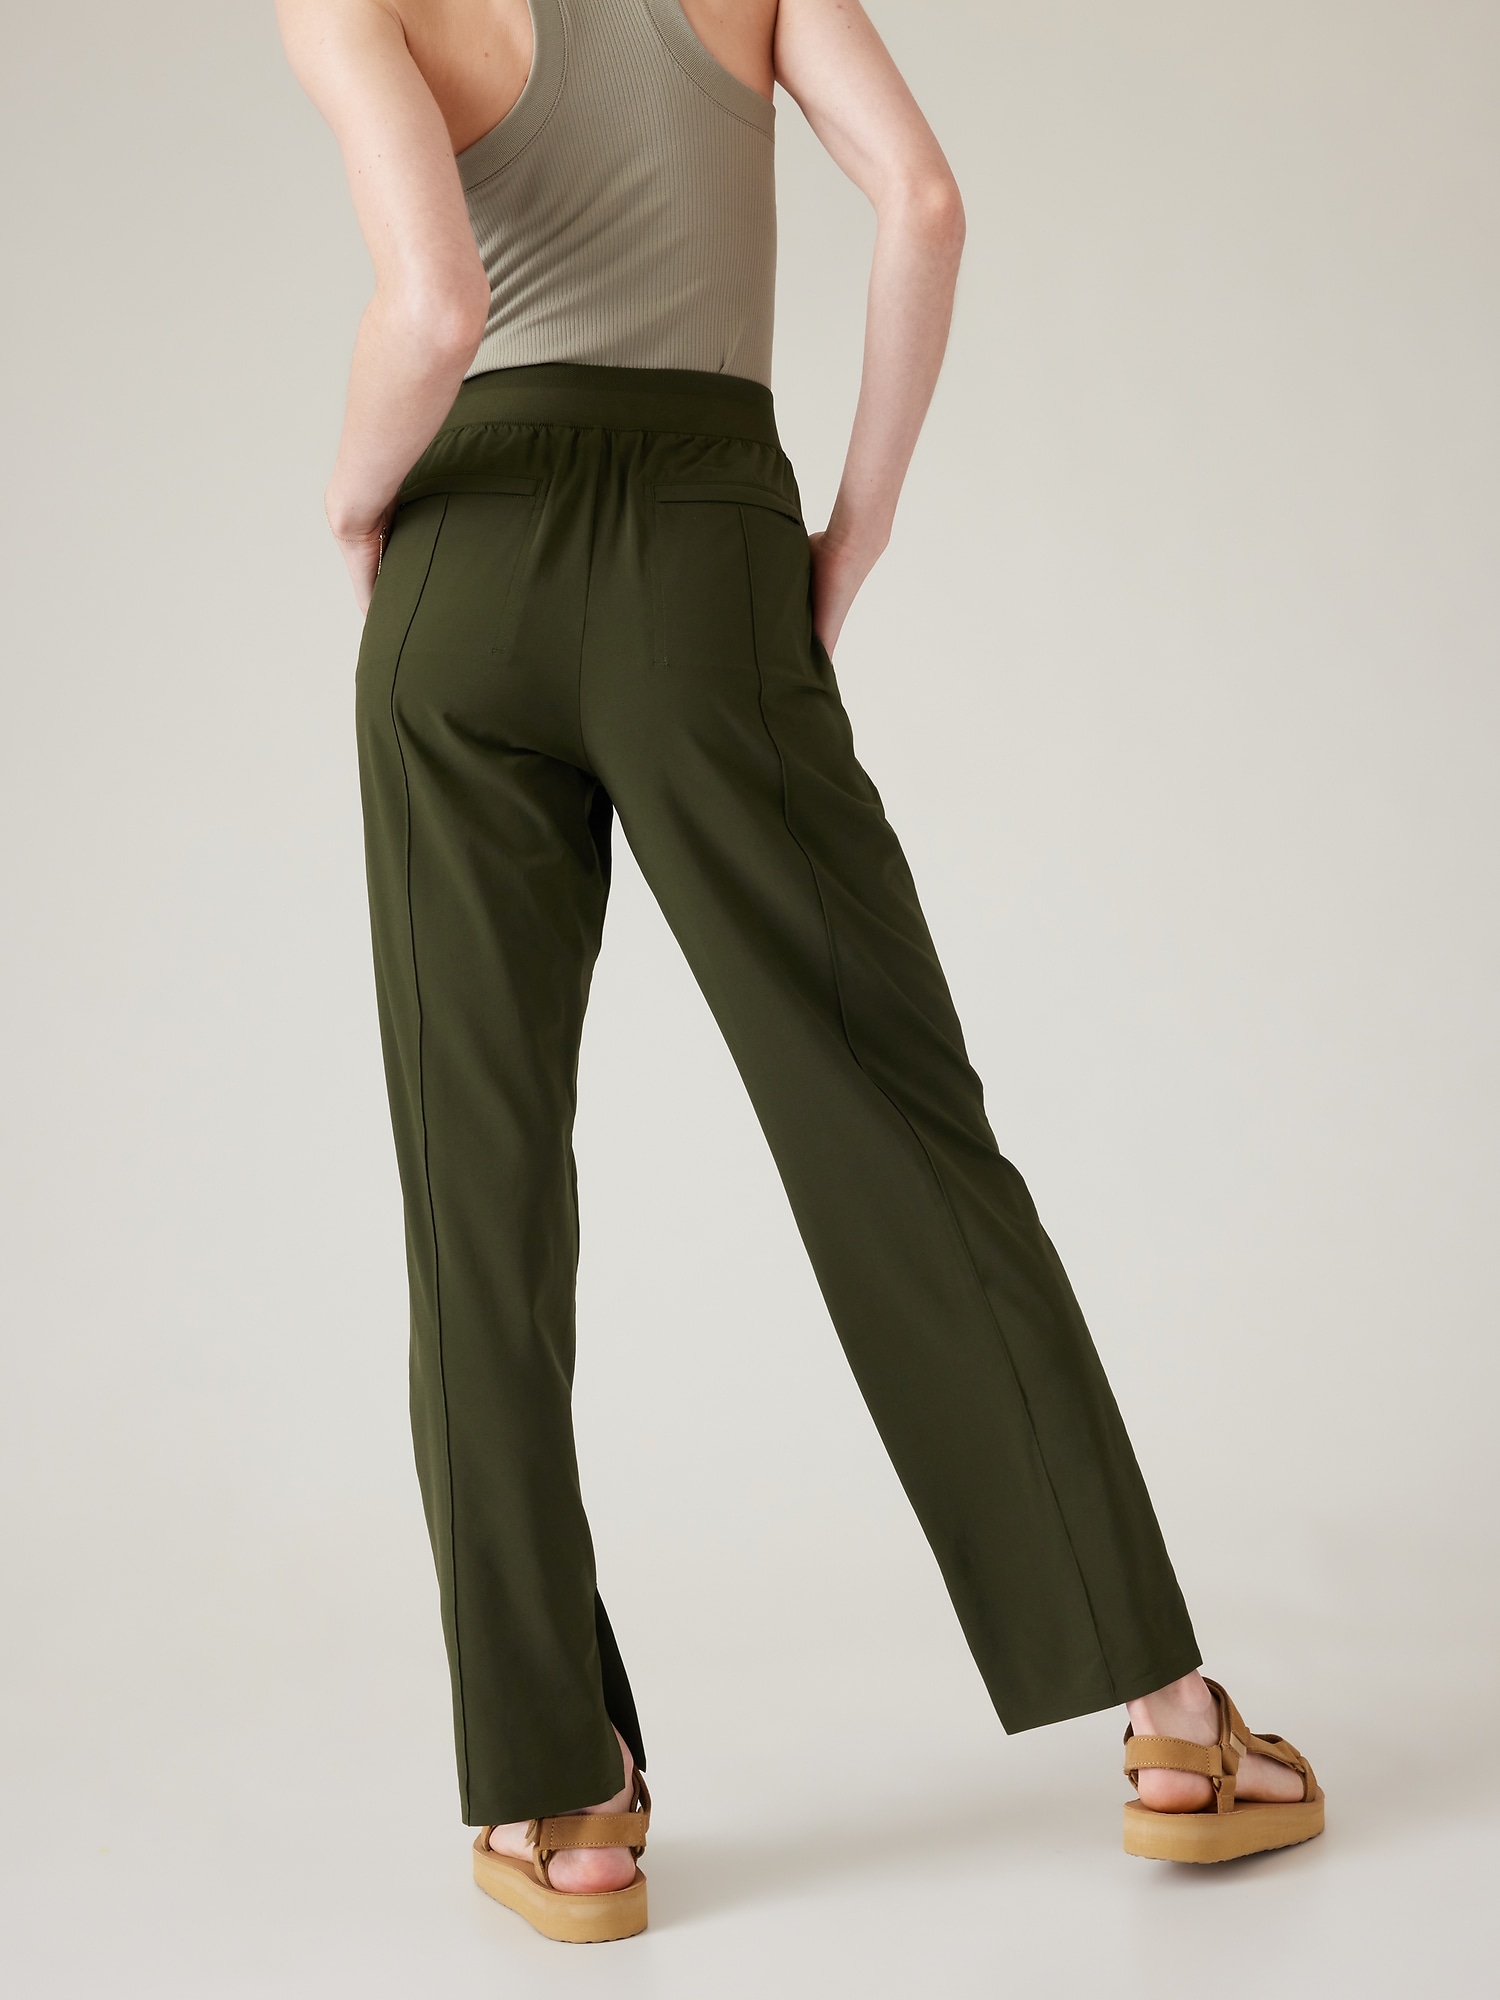 Breathable & Wind-Resistant Nylon Pants